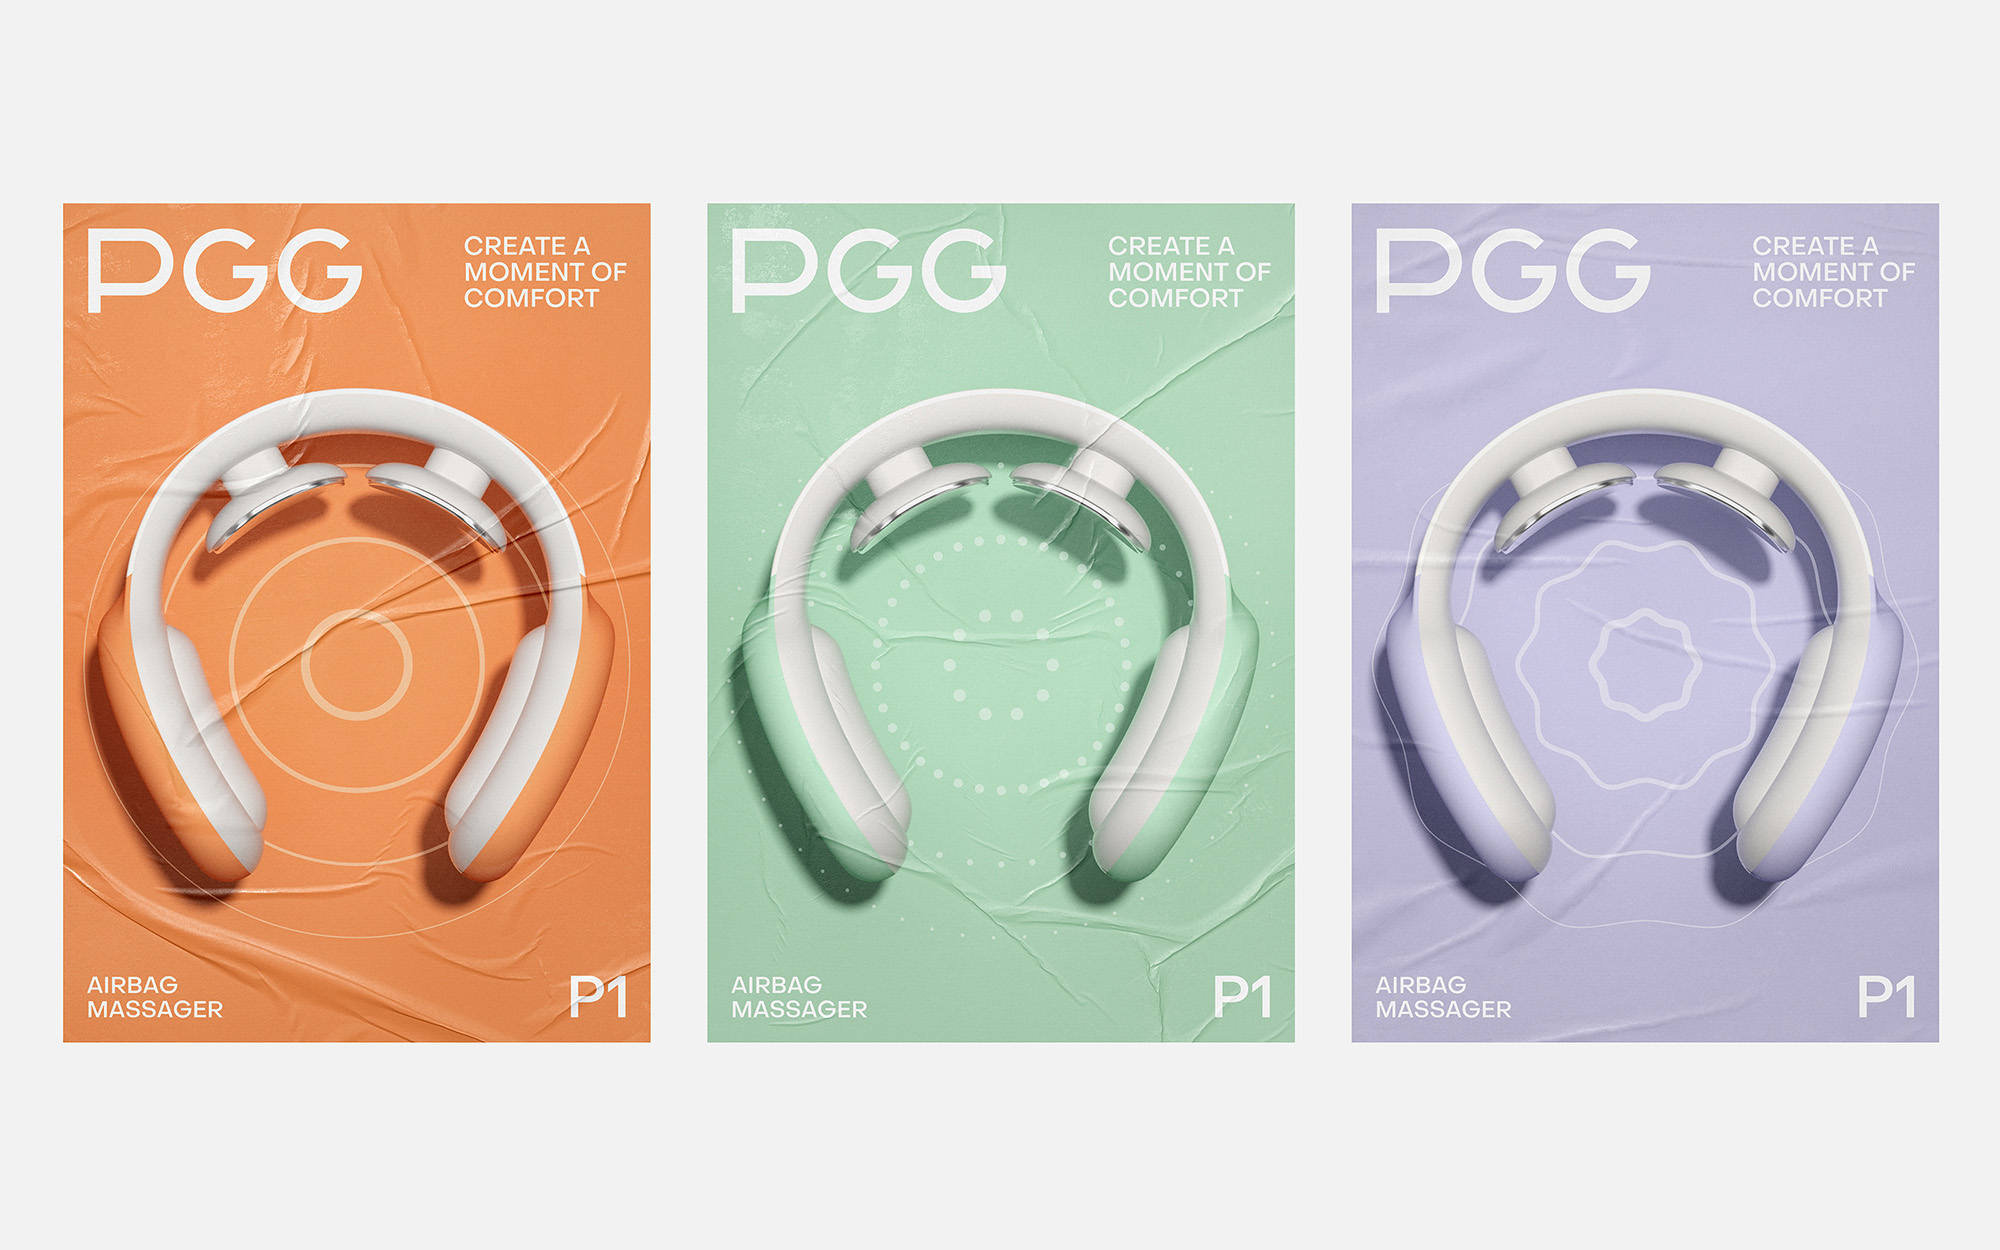 PGG按摩器品牌设计